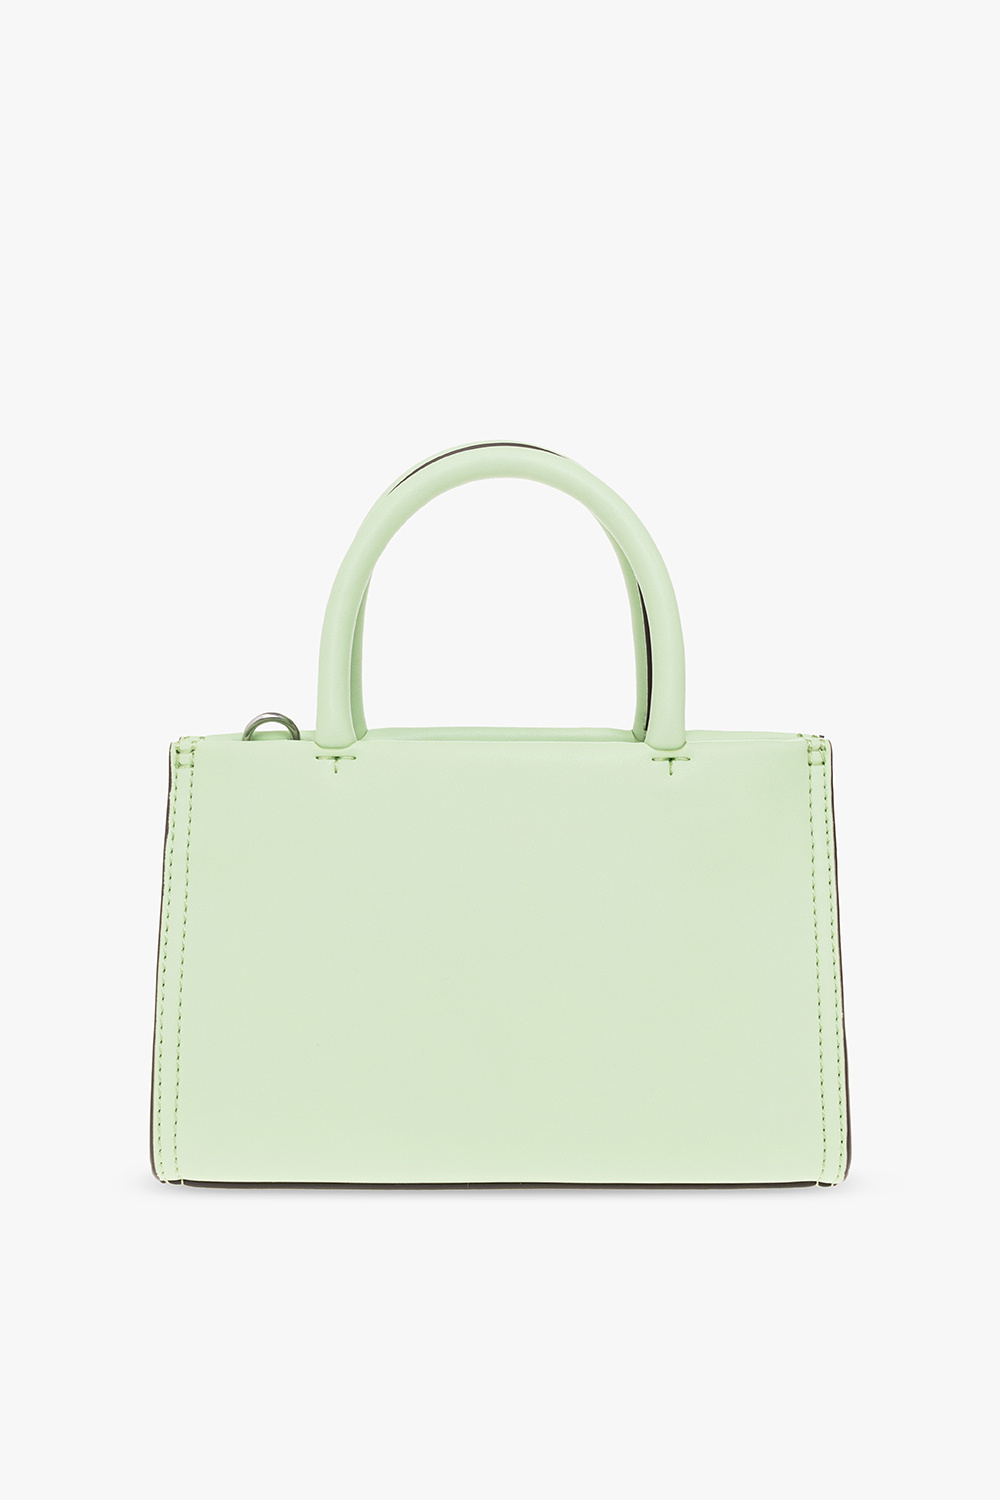 Green 'Ella Bio Mini' shoulder bag Tory Burch - Vitkac HK